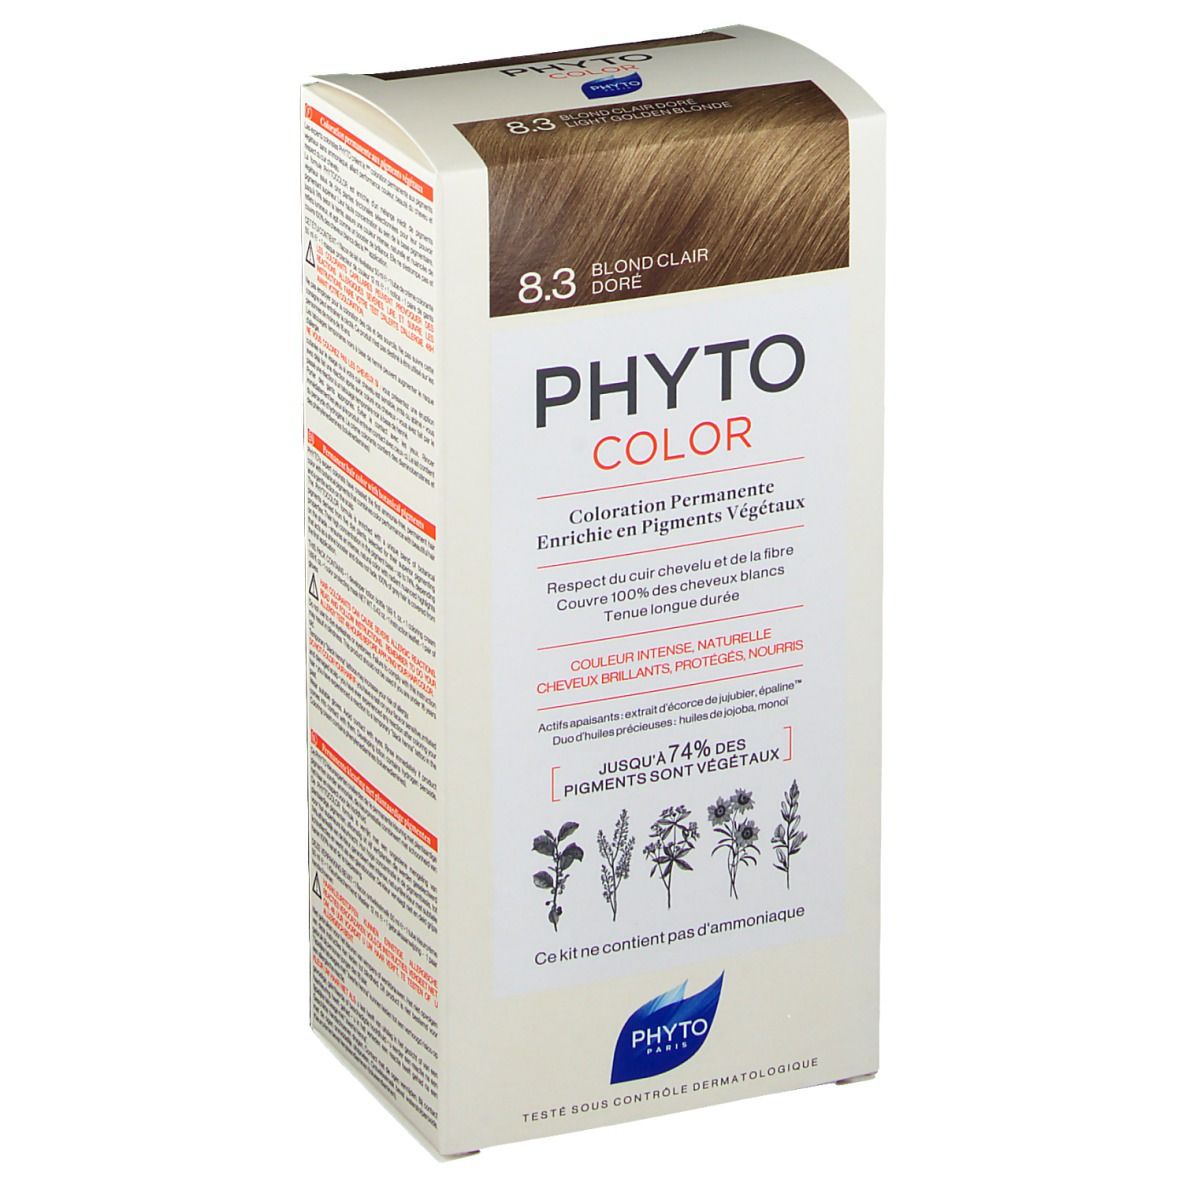 Phyto Phytocolor Coloration permanente 8.3 Blond clair doré